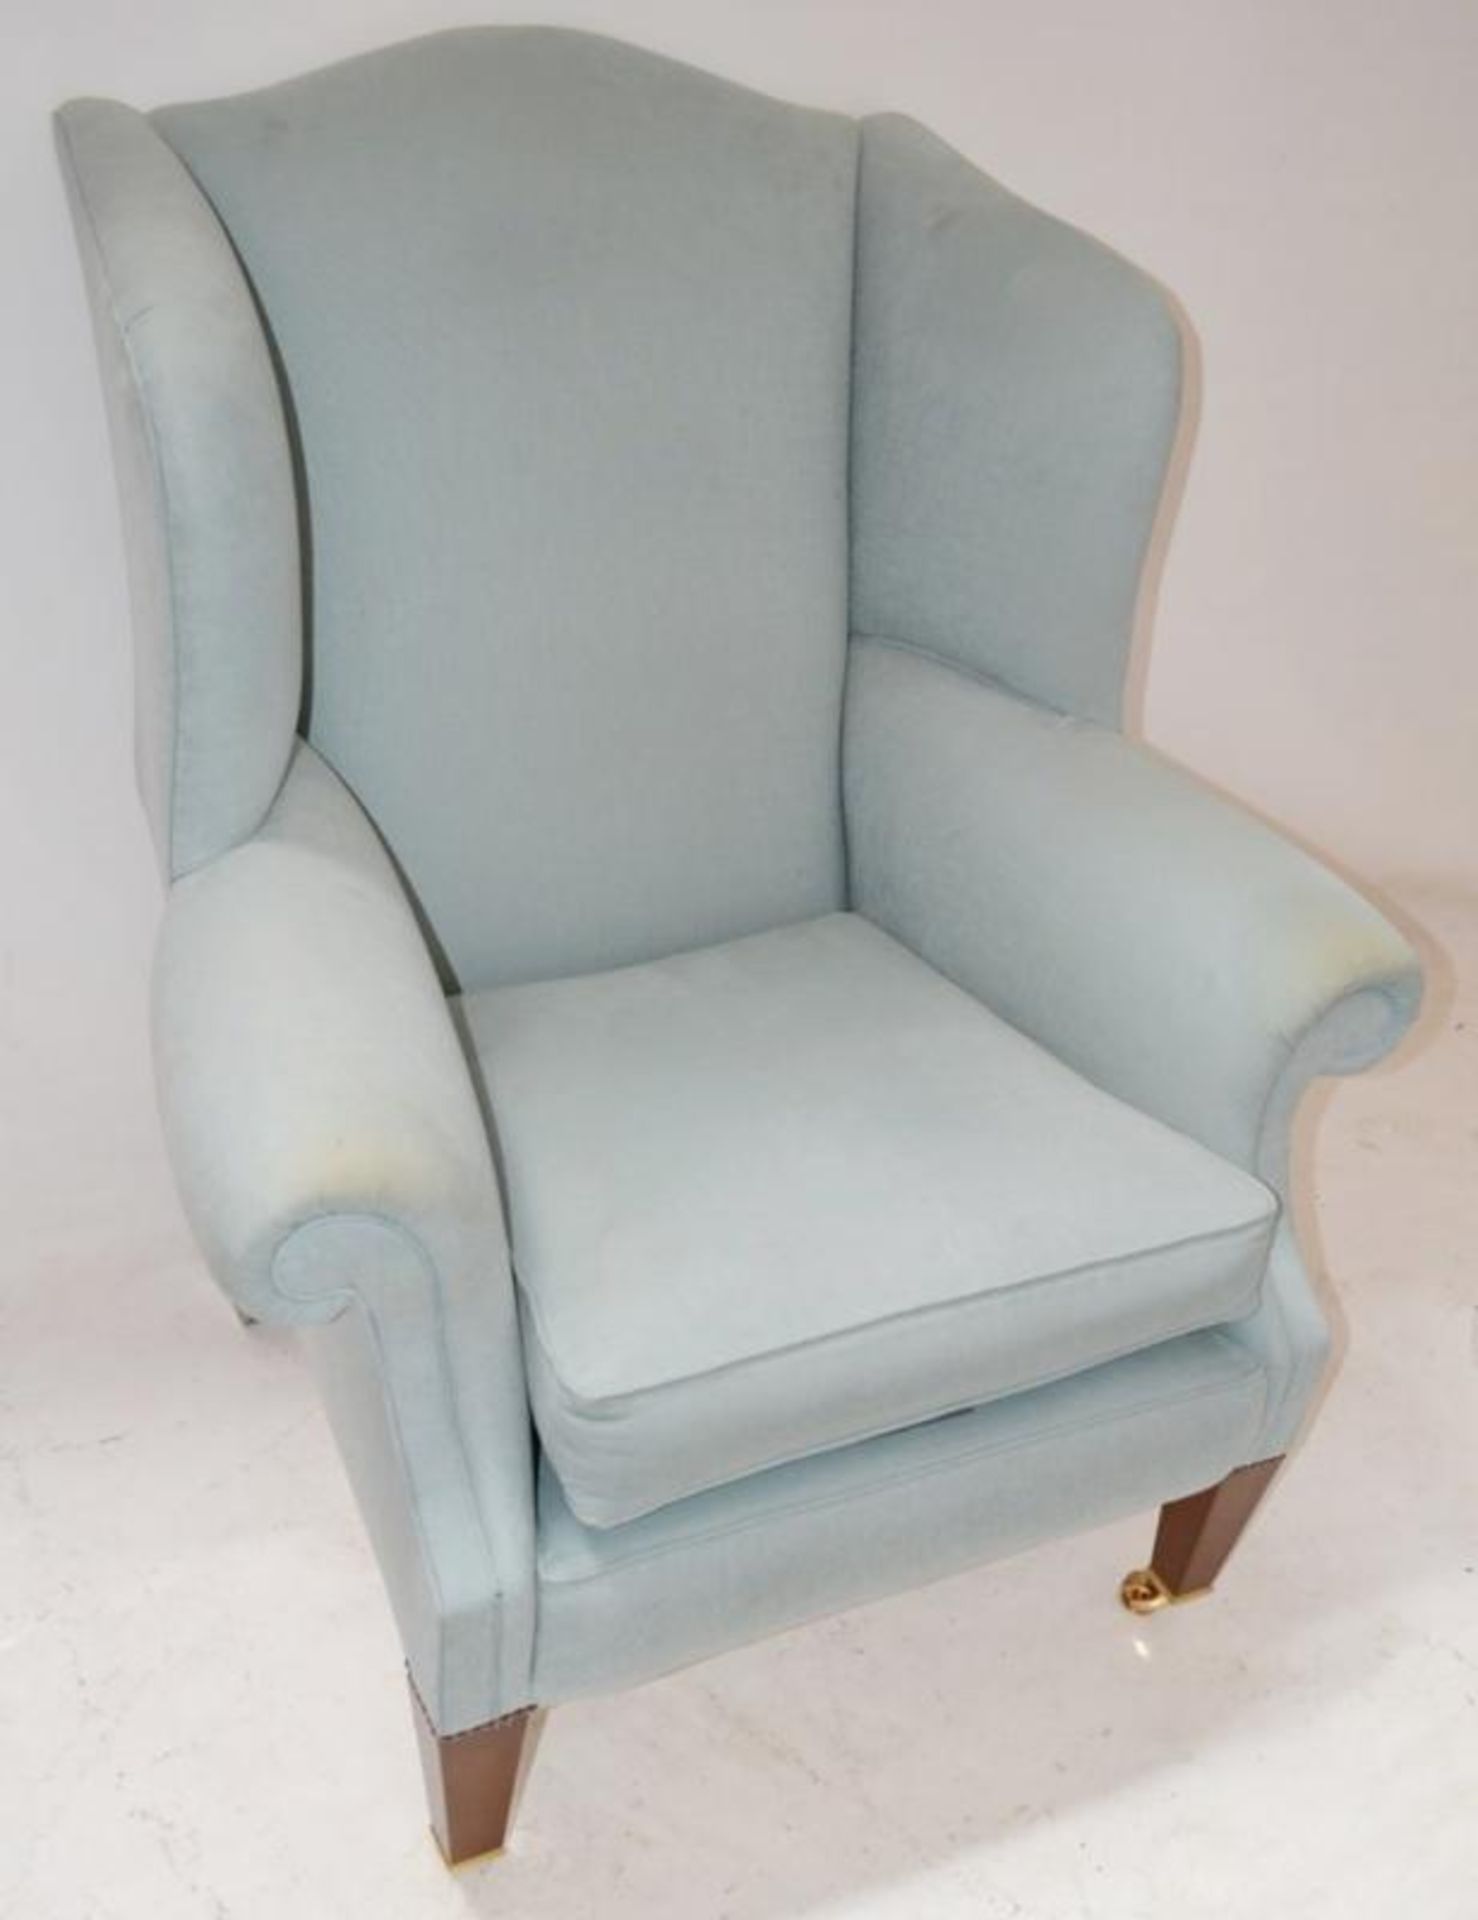 1 x Duresta "Somerset" Wing Chair Light Blue - Please Read Description - Dimensions: 113H x 91W x 92